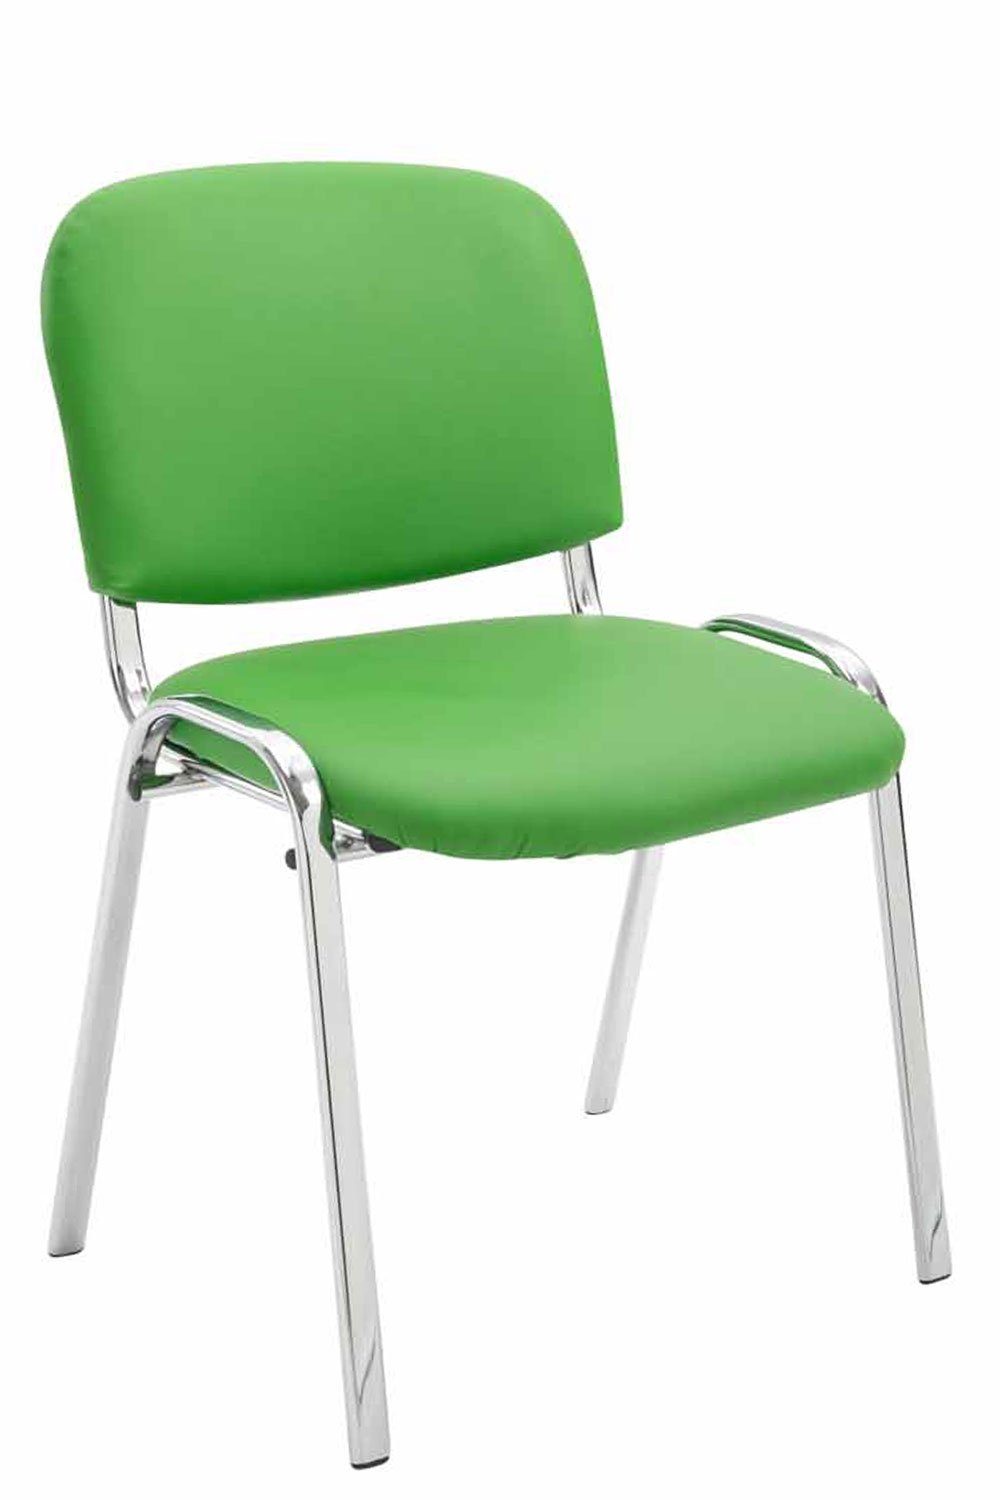 TPFLiving Besucherstuhl Keen mit hochwertiger Polsterung - Konferenzstuhl (Besprechungsstuhl - Warteraumstuhl - Messestuhl), Gestell: Metall chrom - Sitzfläche: Kunstleder grün